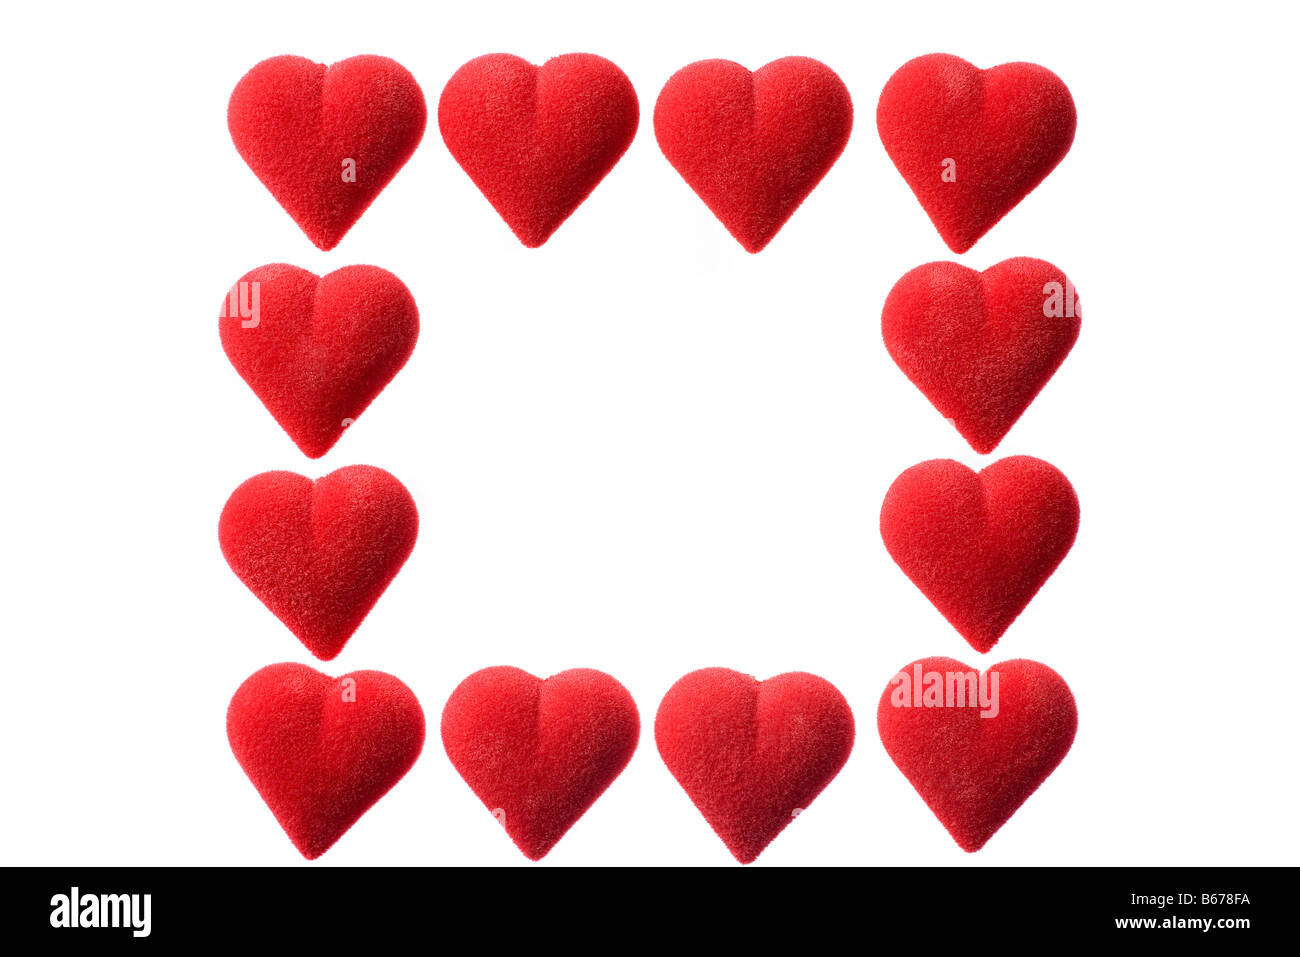 Hearts in a row Stock Photo